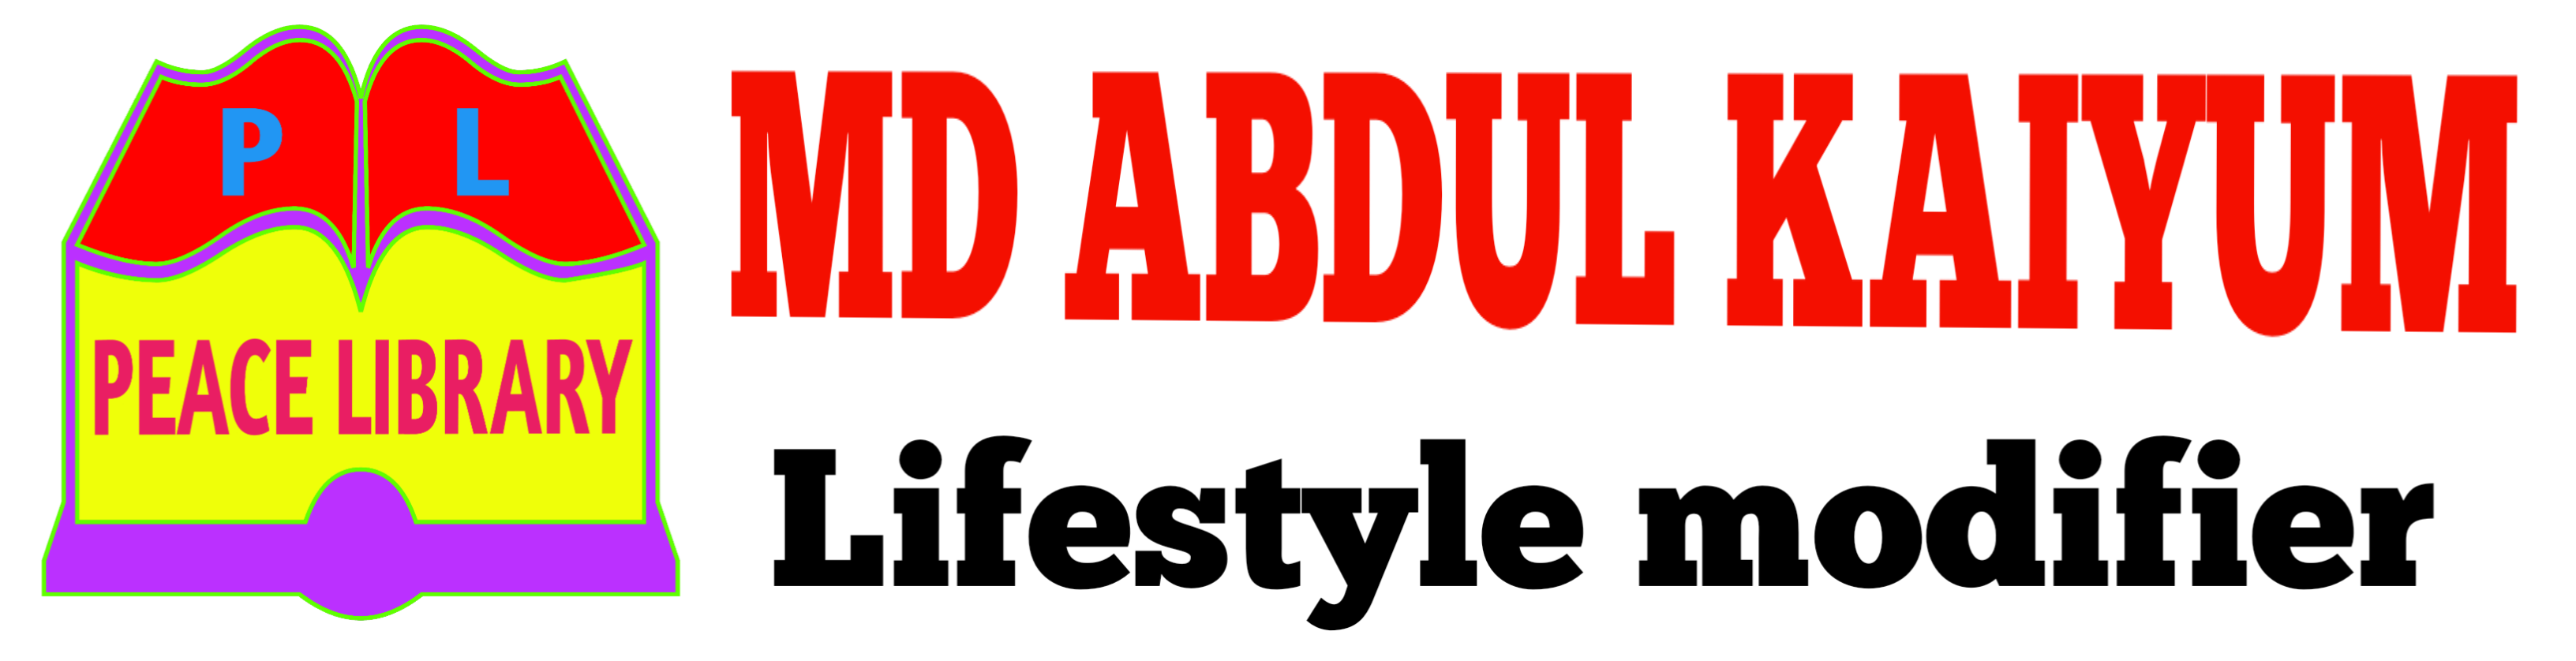 MD_ABDUL_KAIYUM Logo